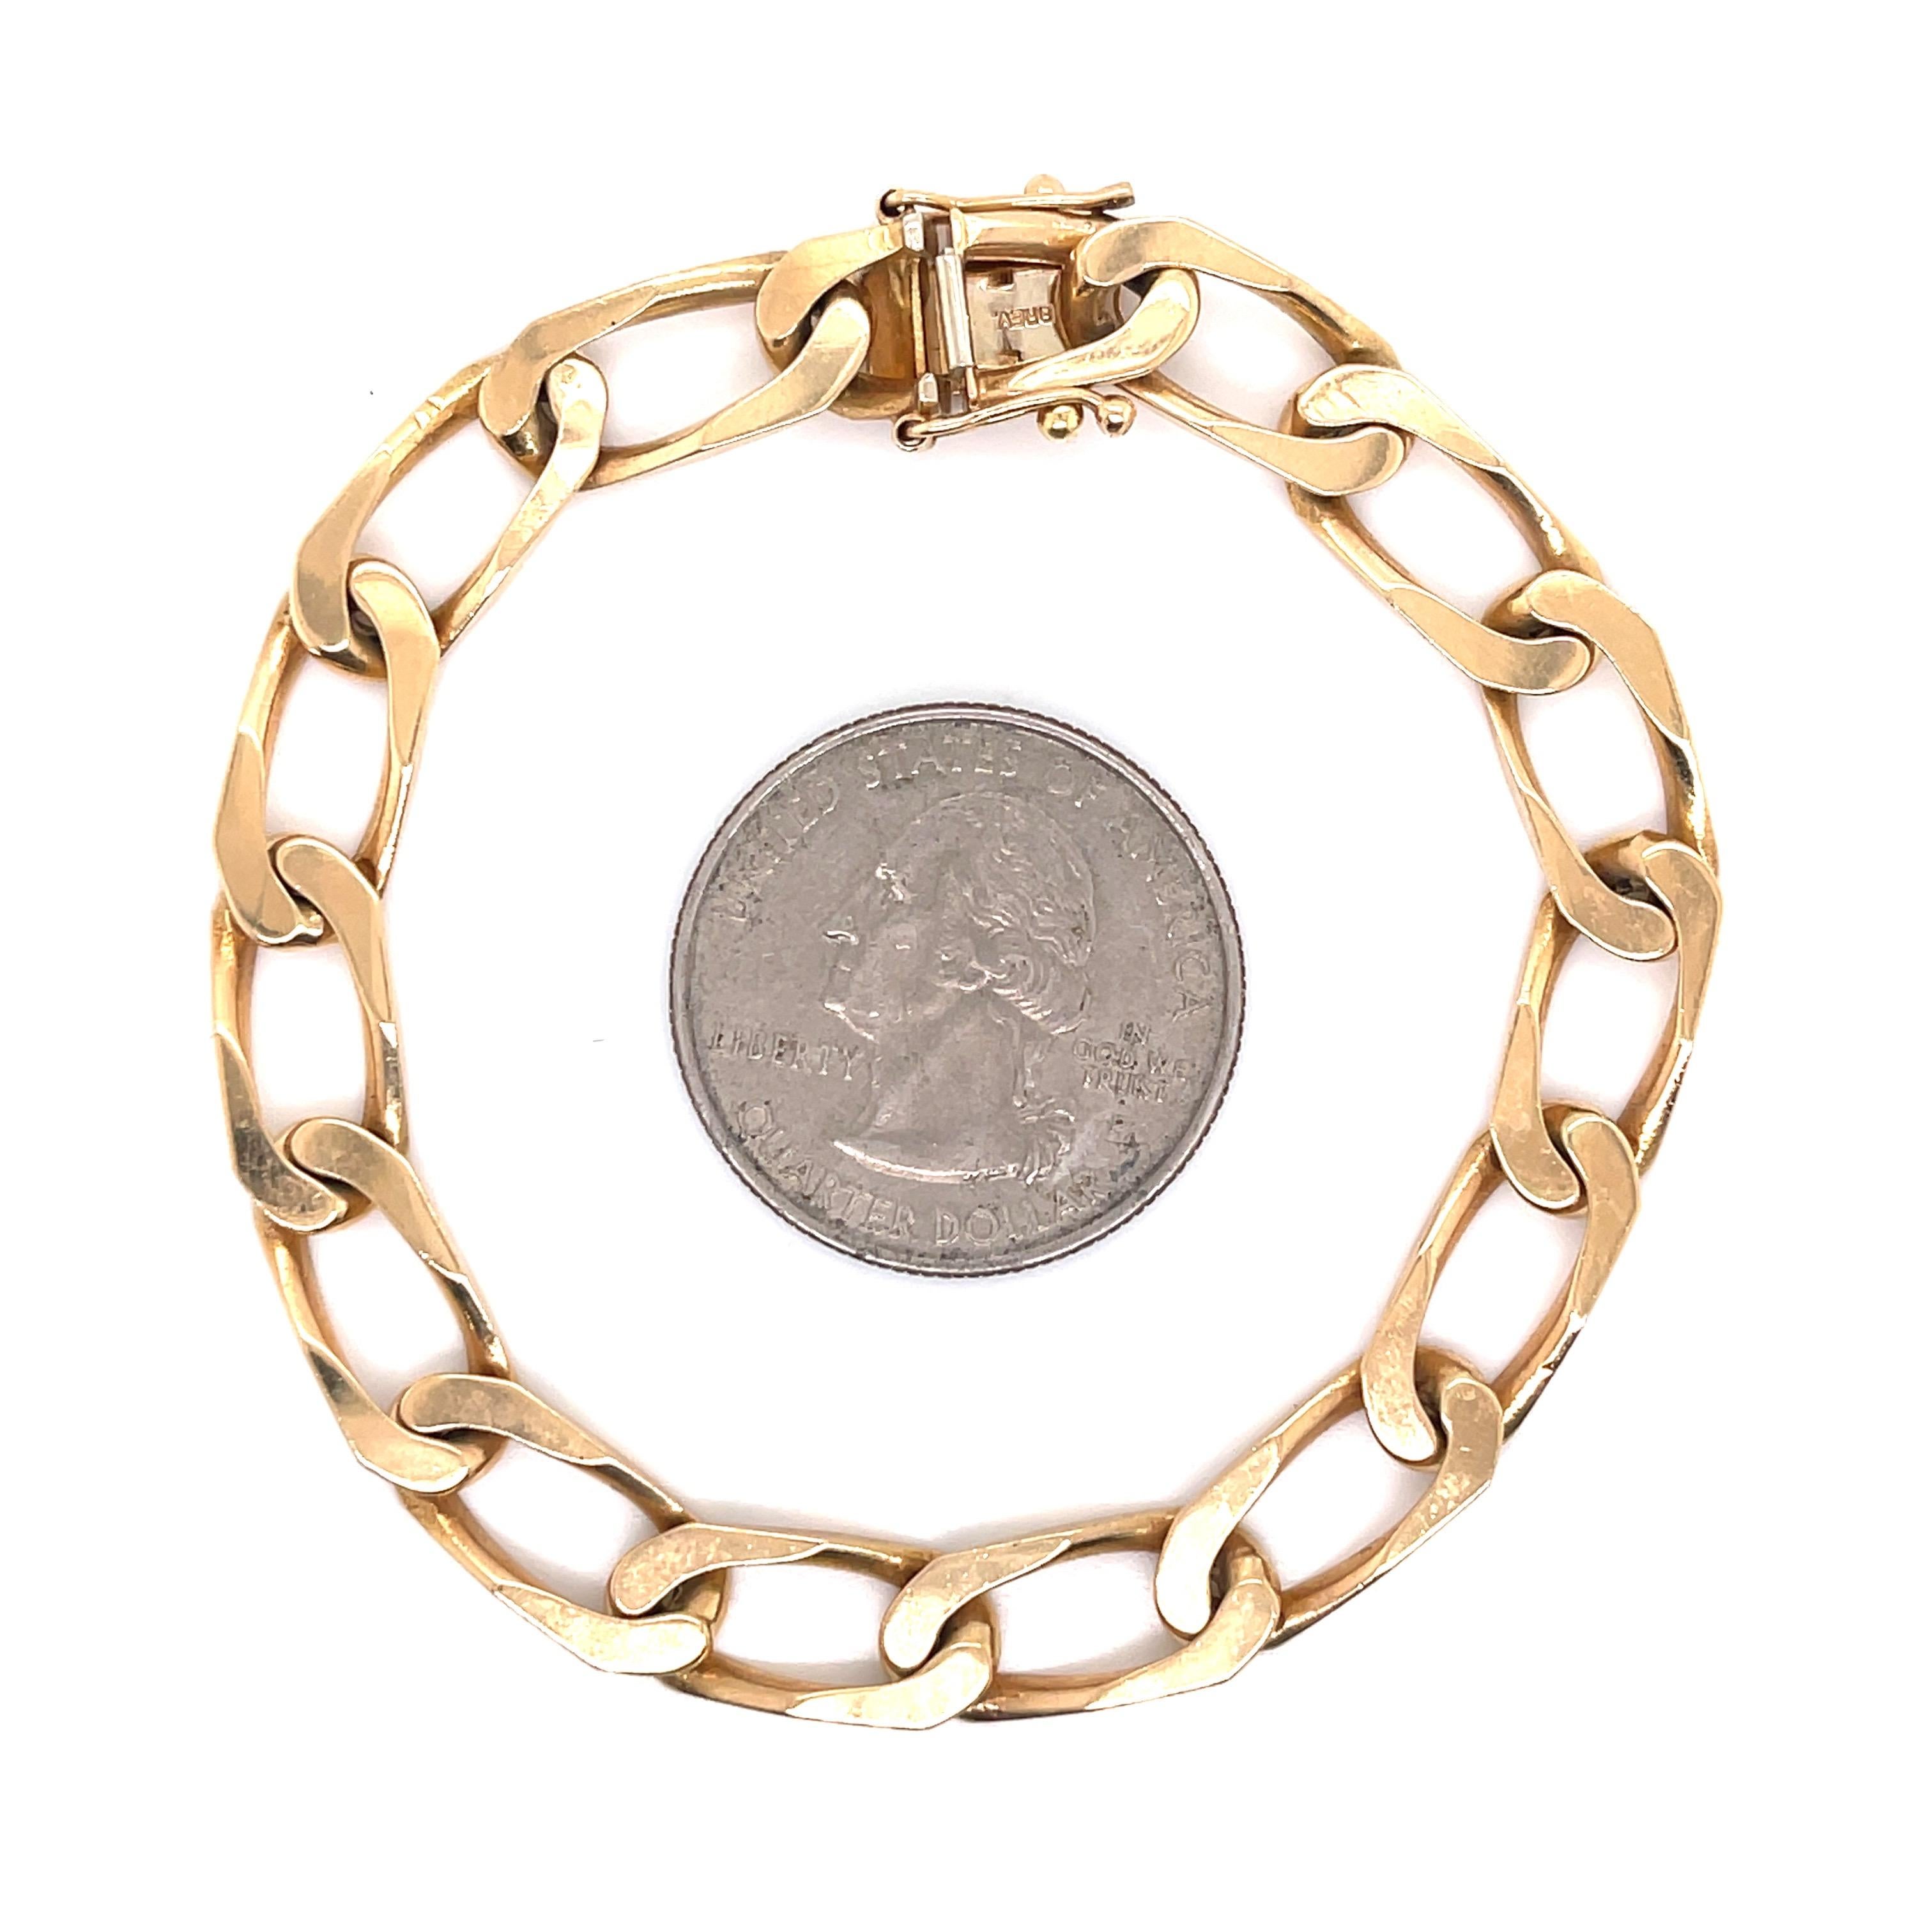 14 Karat yellow gold bracelet featuring 15 oval shape links weighing 18.05 grams. 7